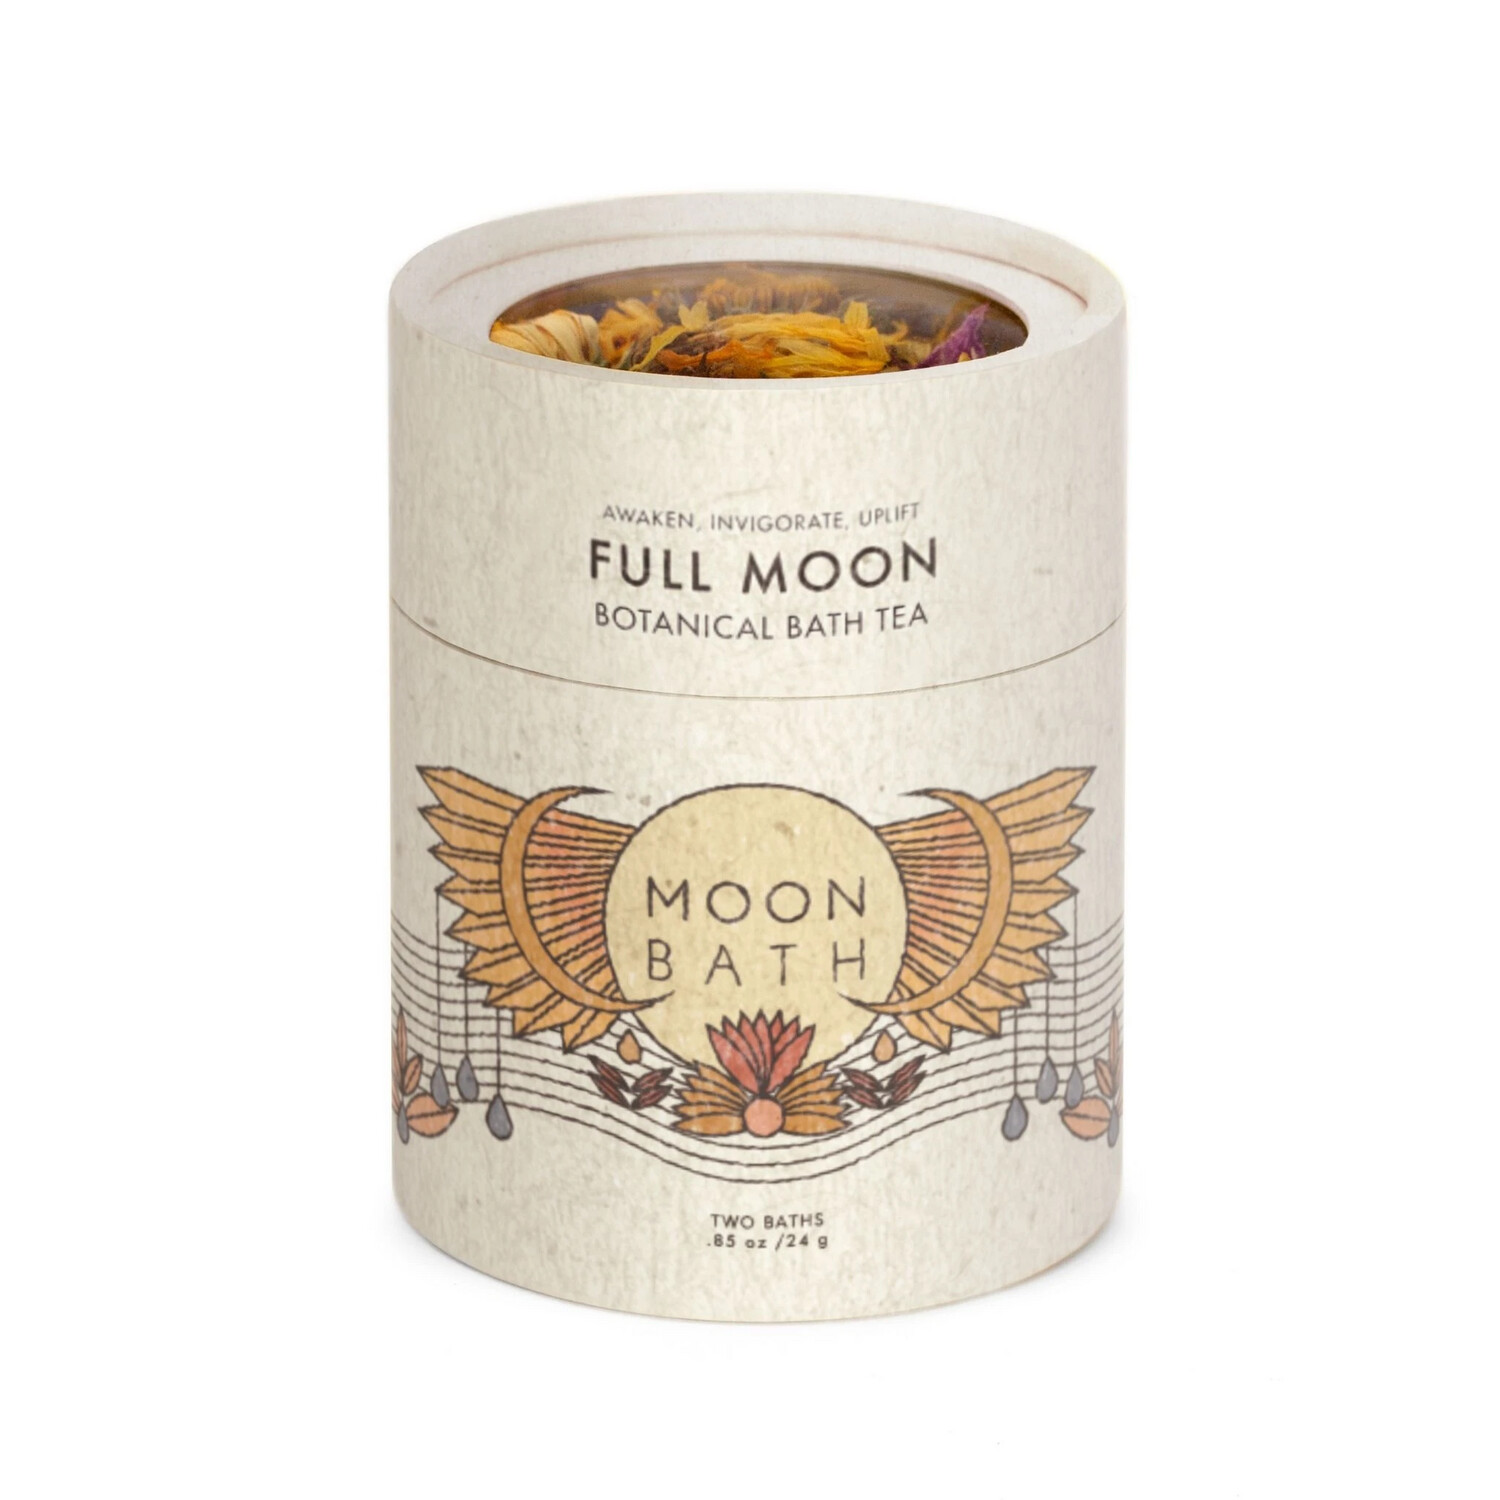 Moon Bath - Full Moon Botanical Bath Tea